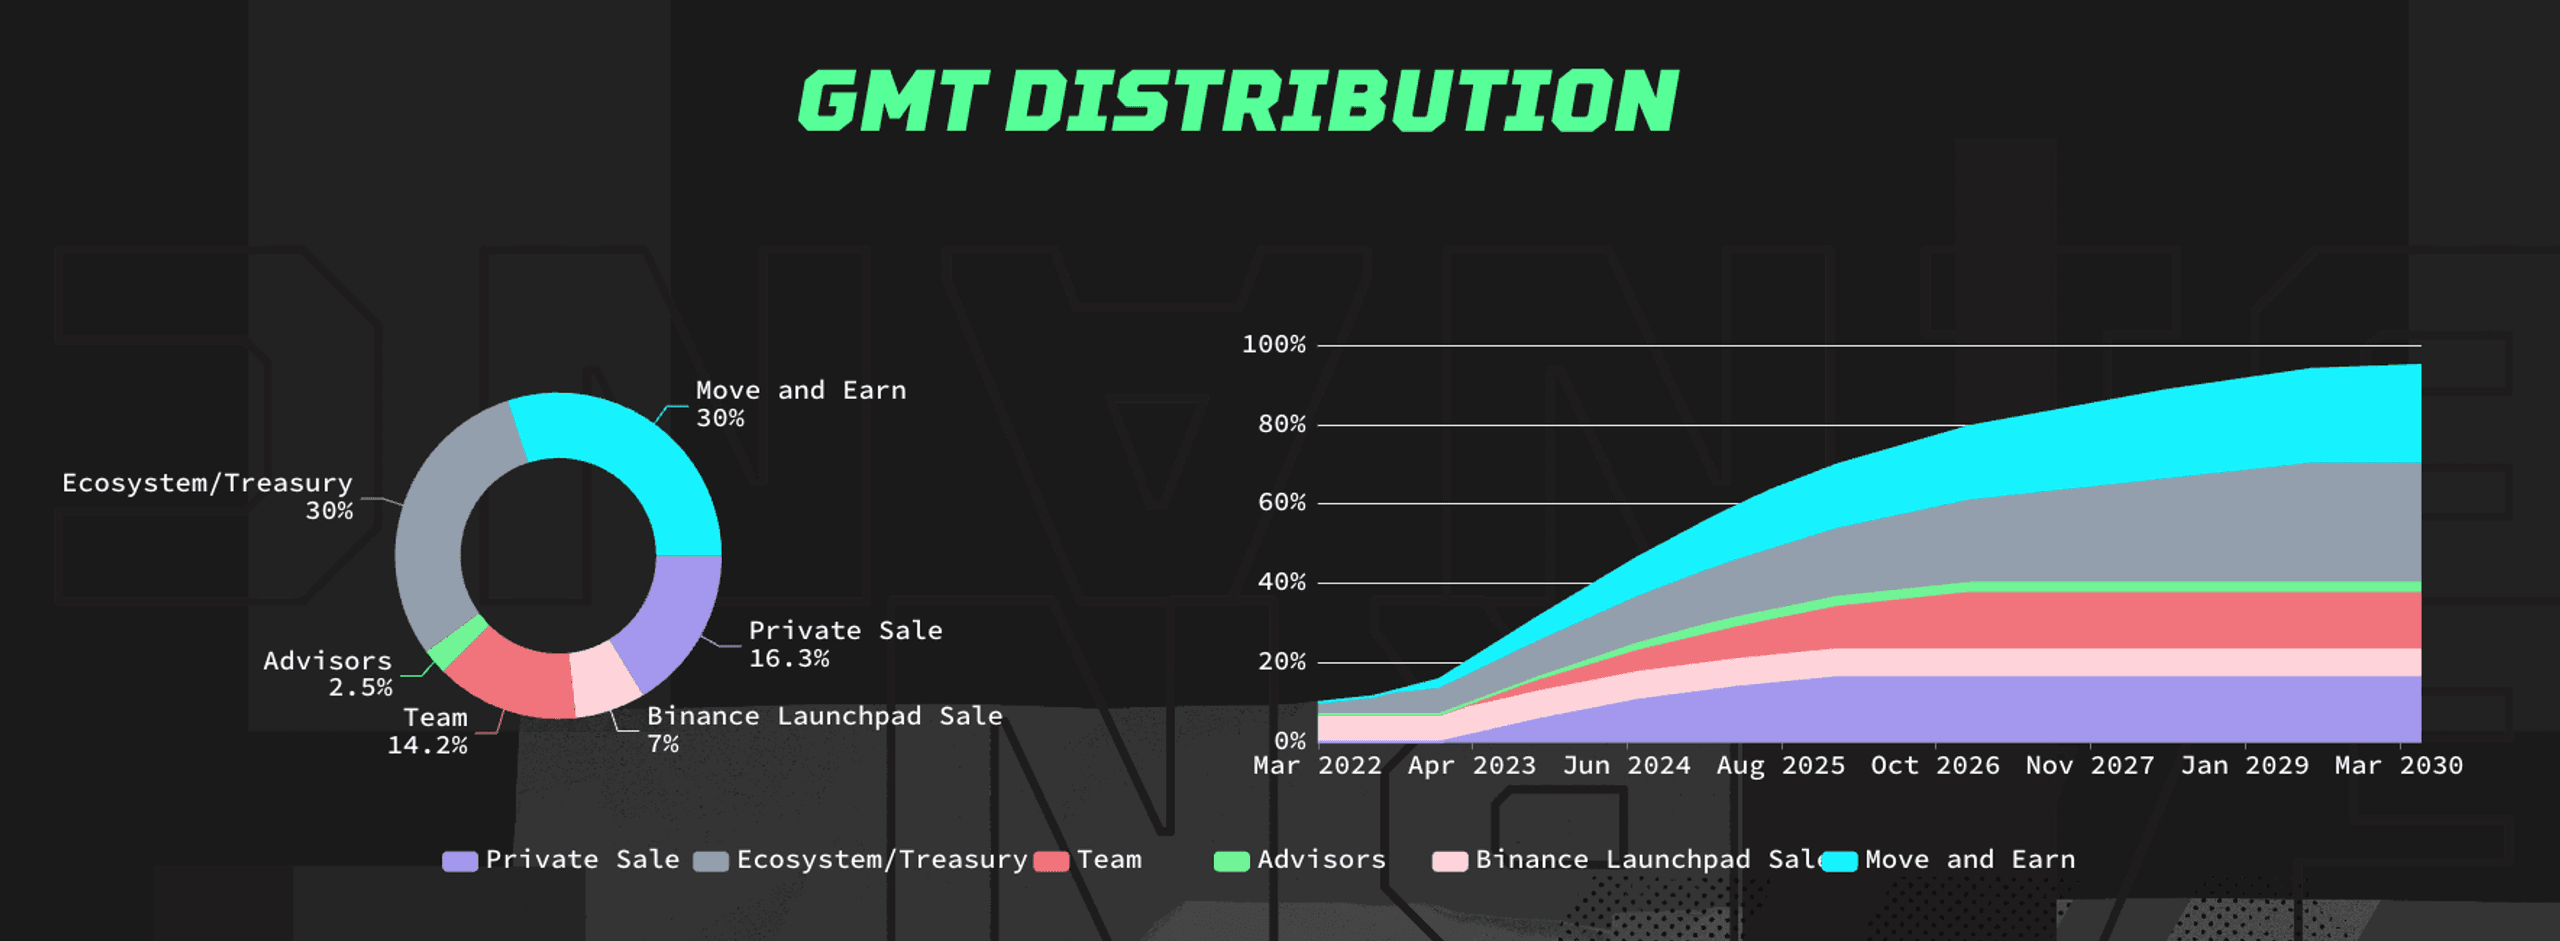 gmt distribution